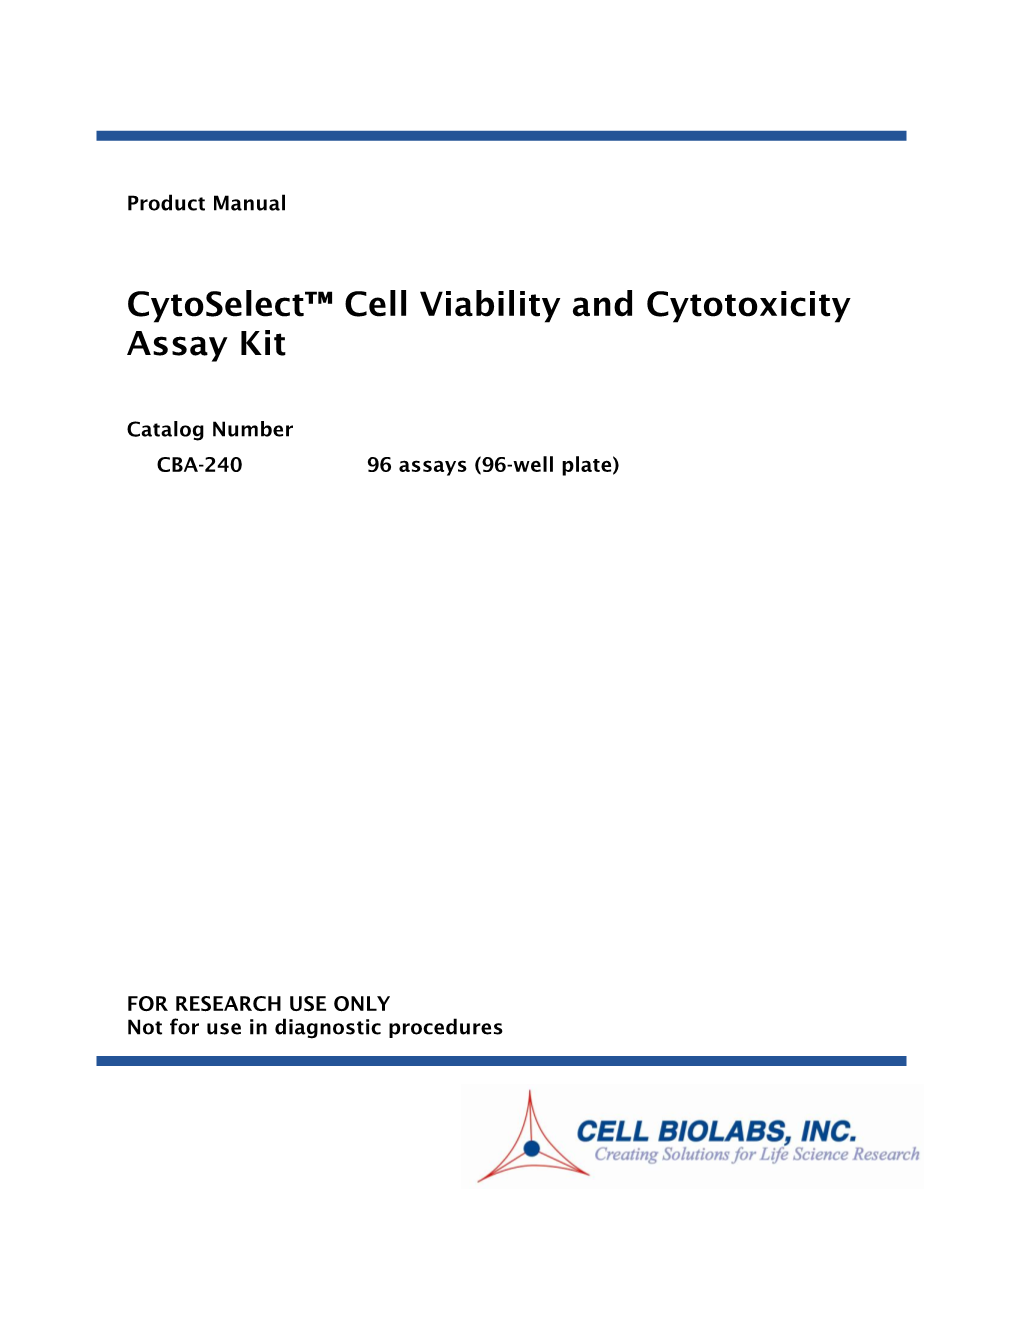 Cytoselect™ Cell Viability and Cytotoxicity Assay Kit